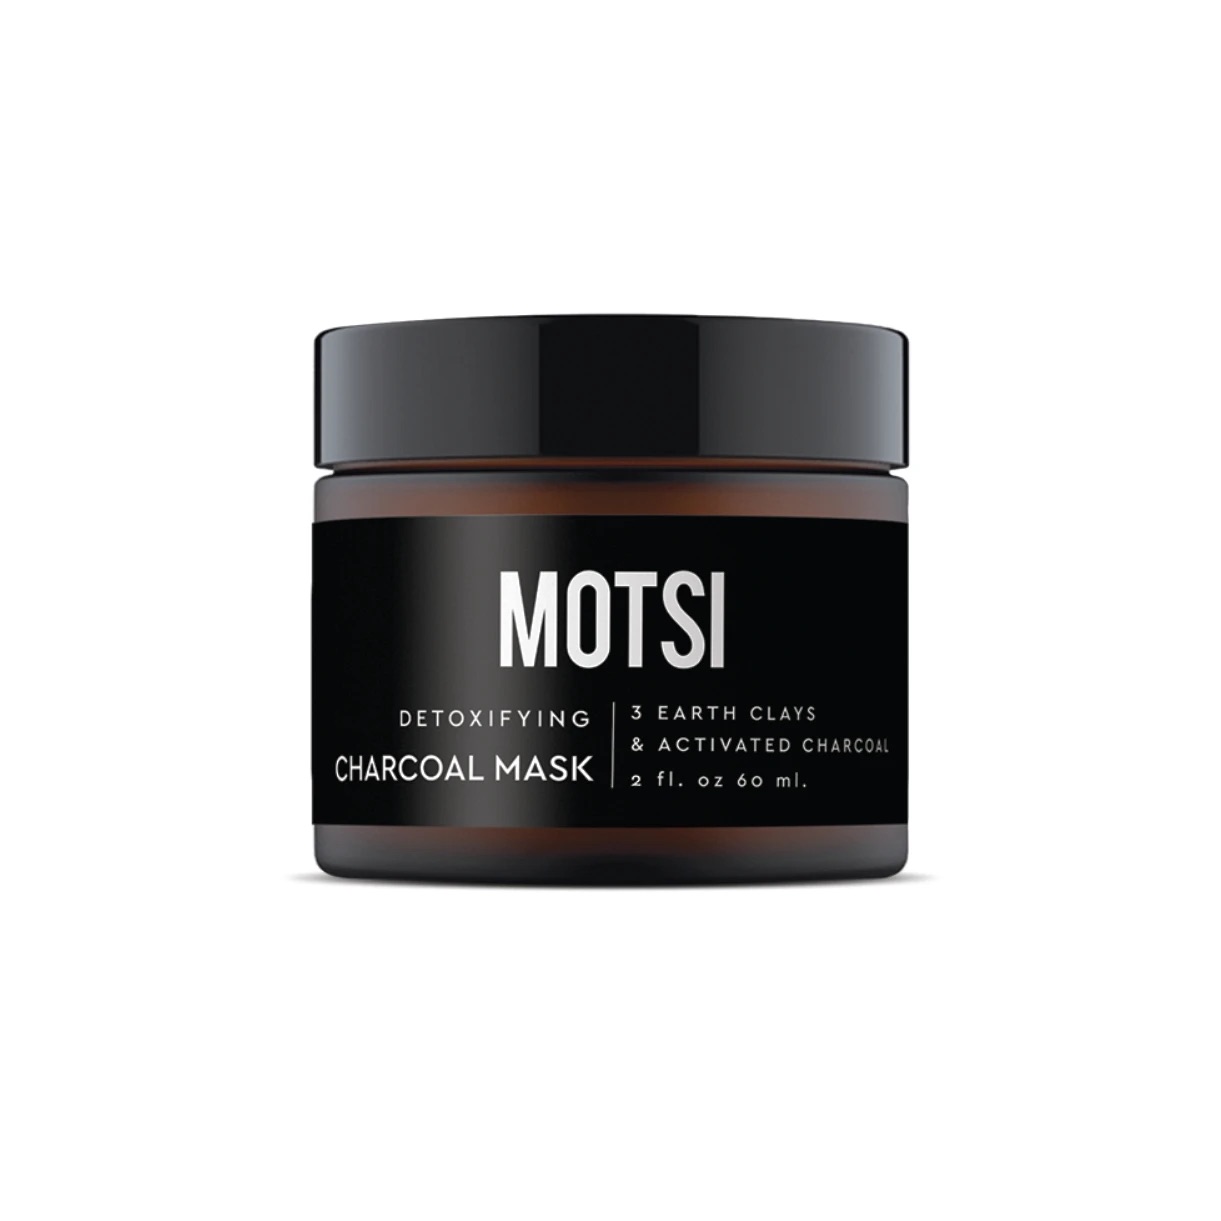 Motsi Detoxifying Charcoal Mask, $45